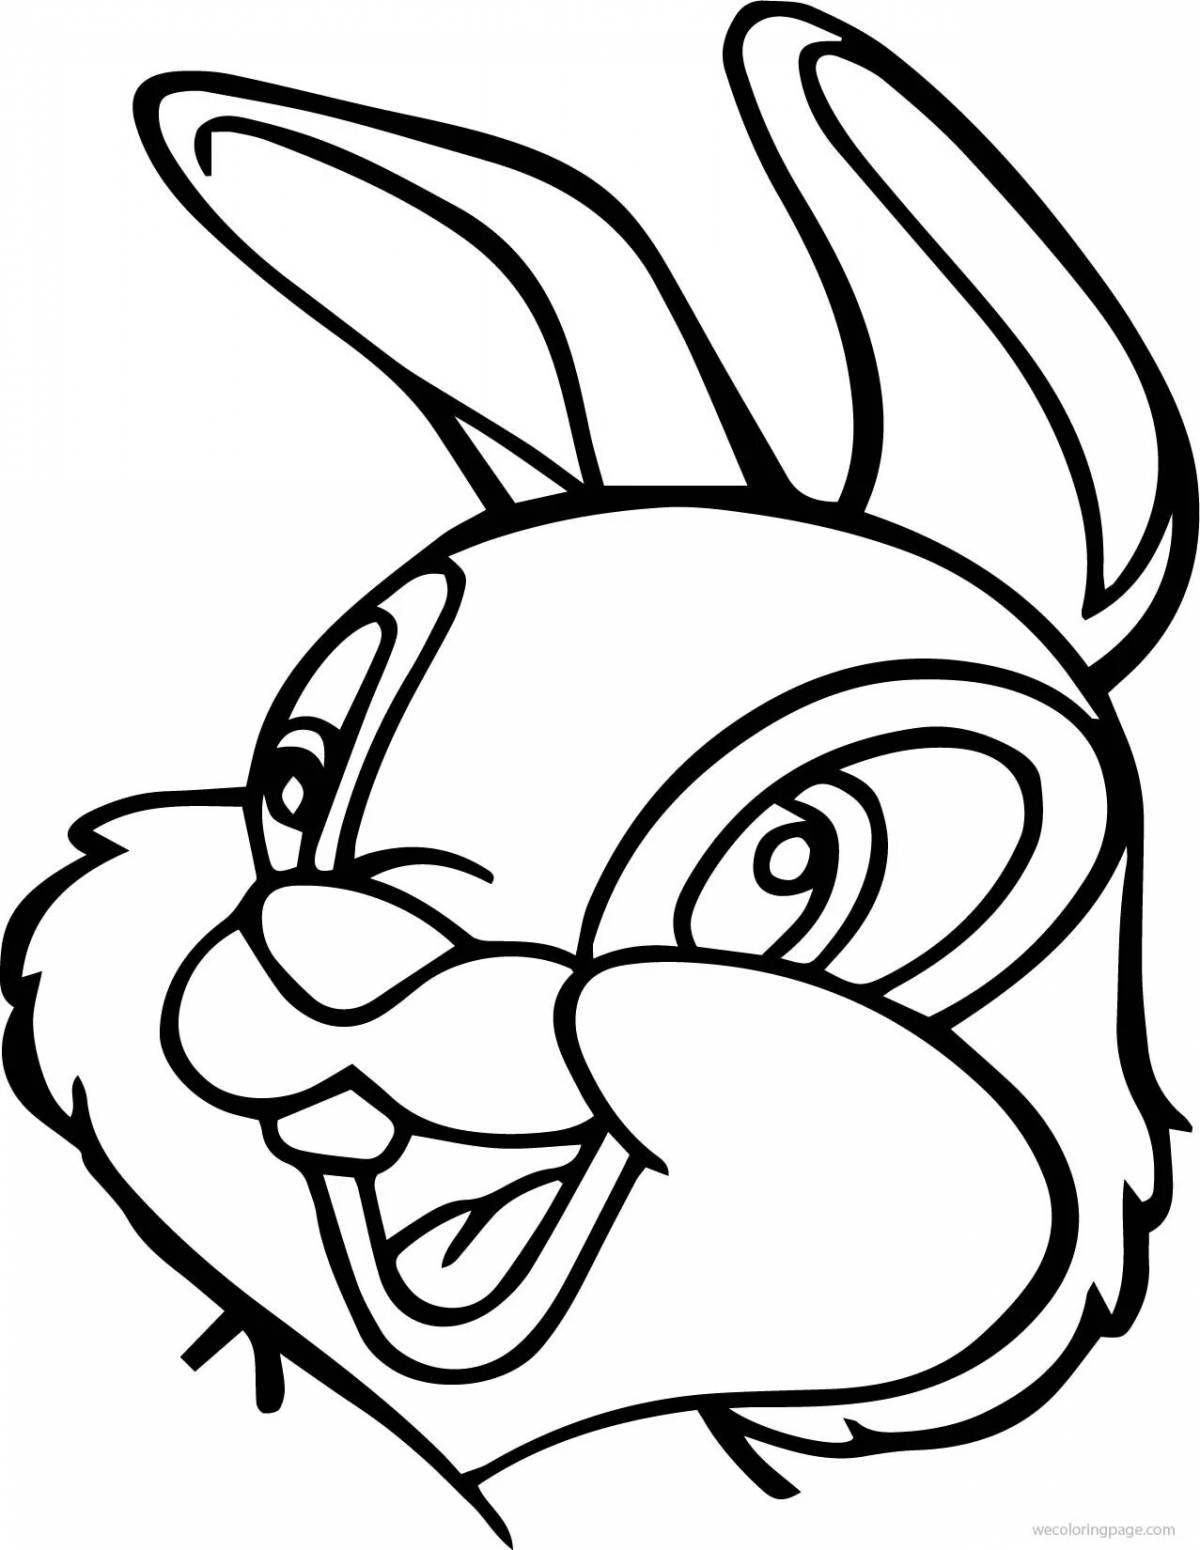 Adorable rabbit head coloring book